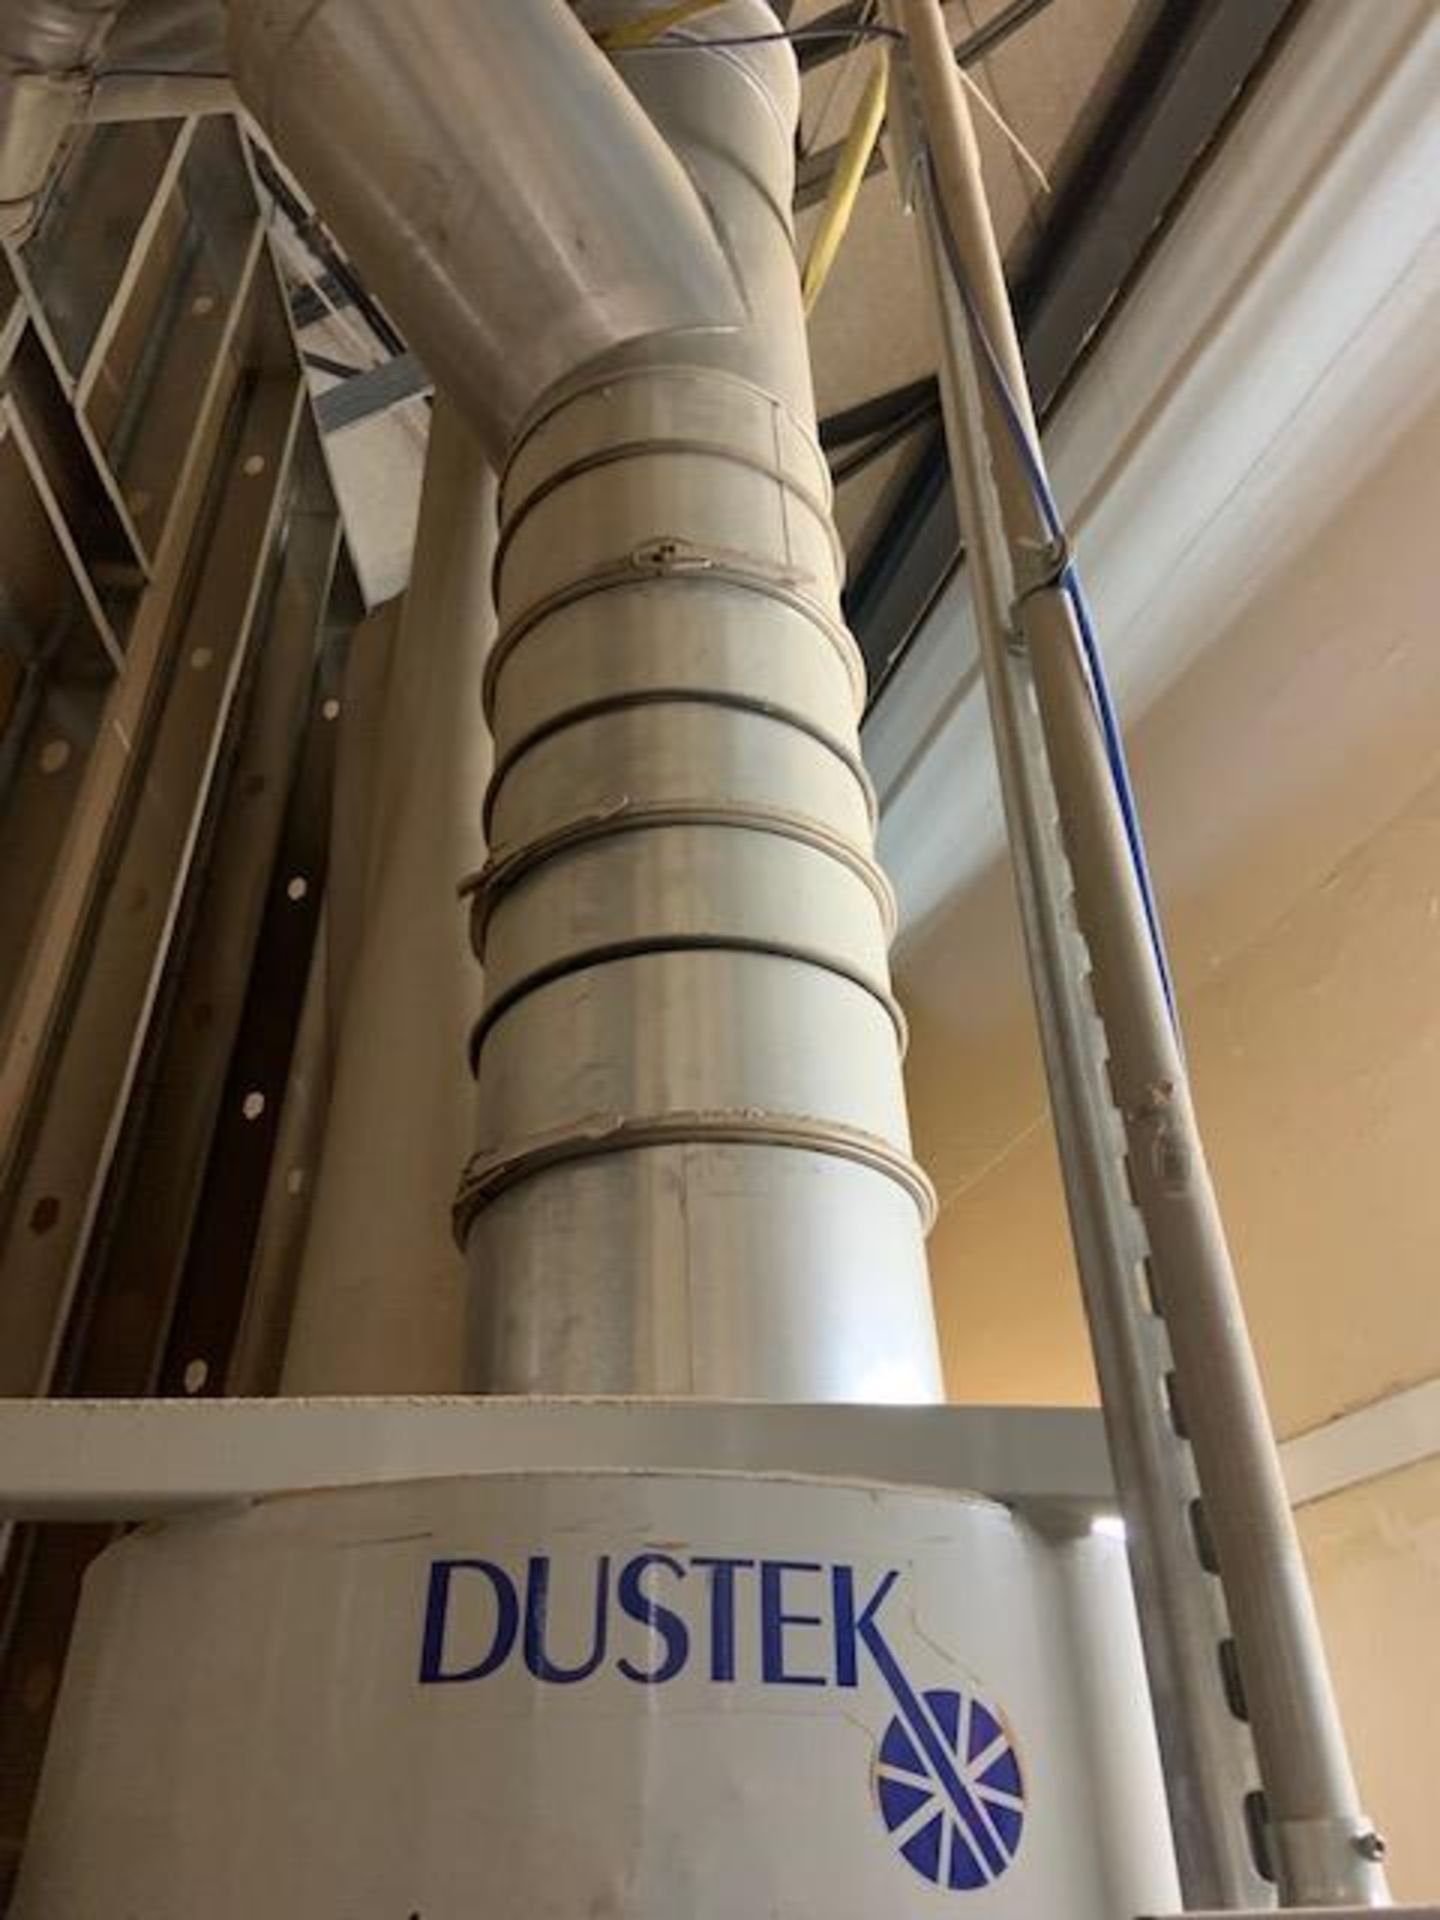 Dustek Model C2000-06-240 20HP Dust Collection System